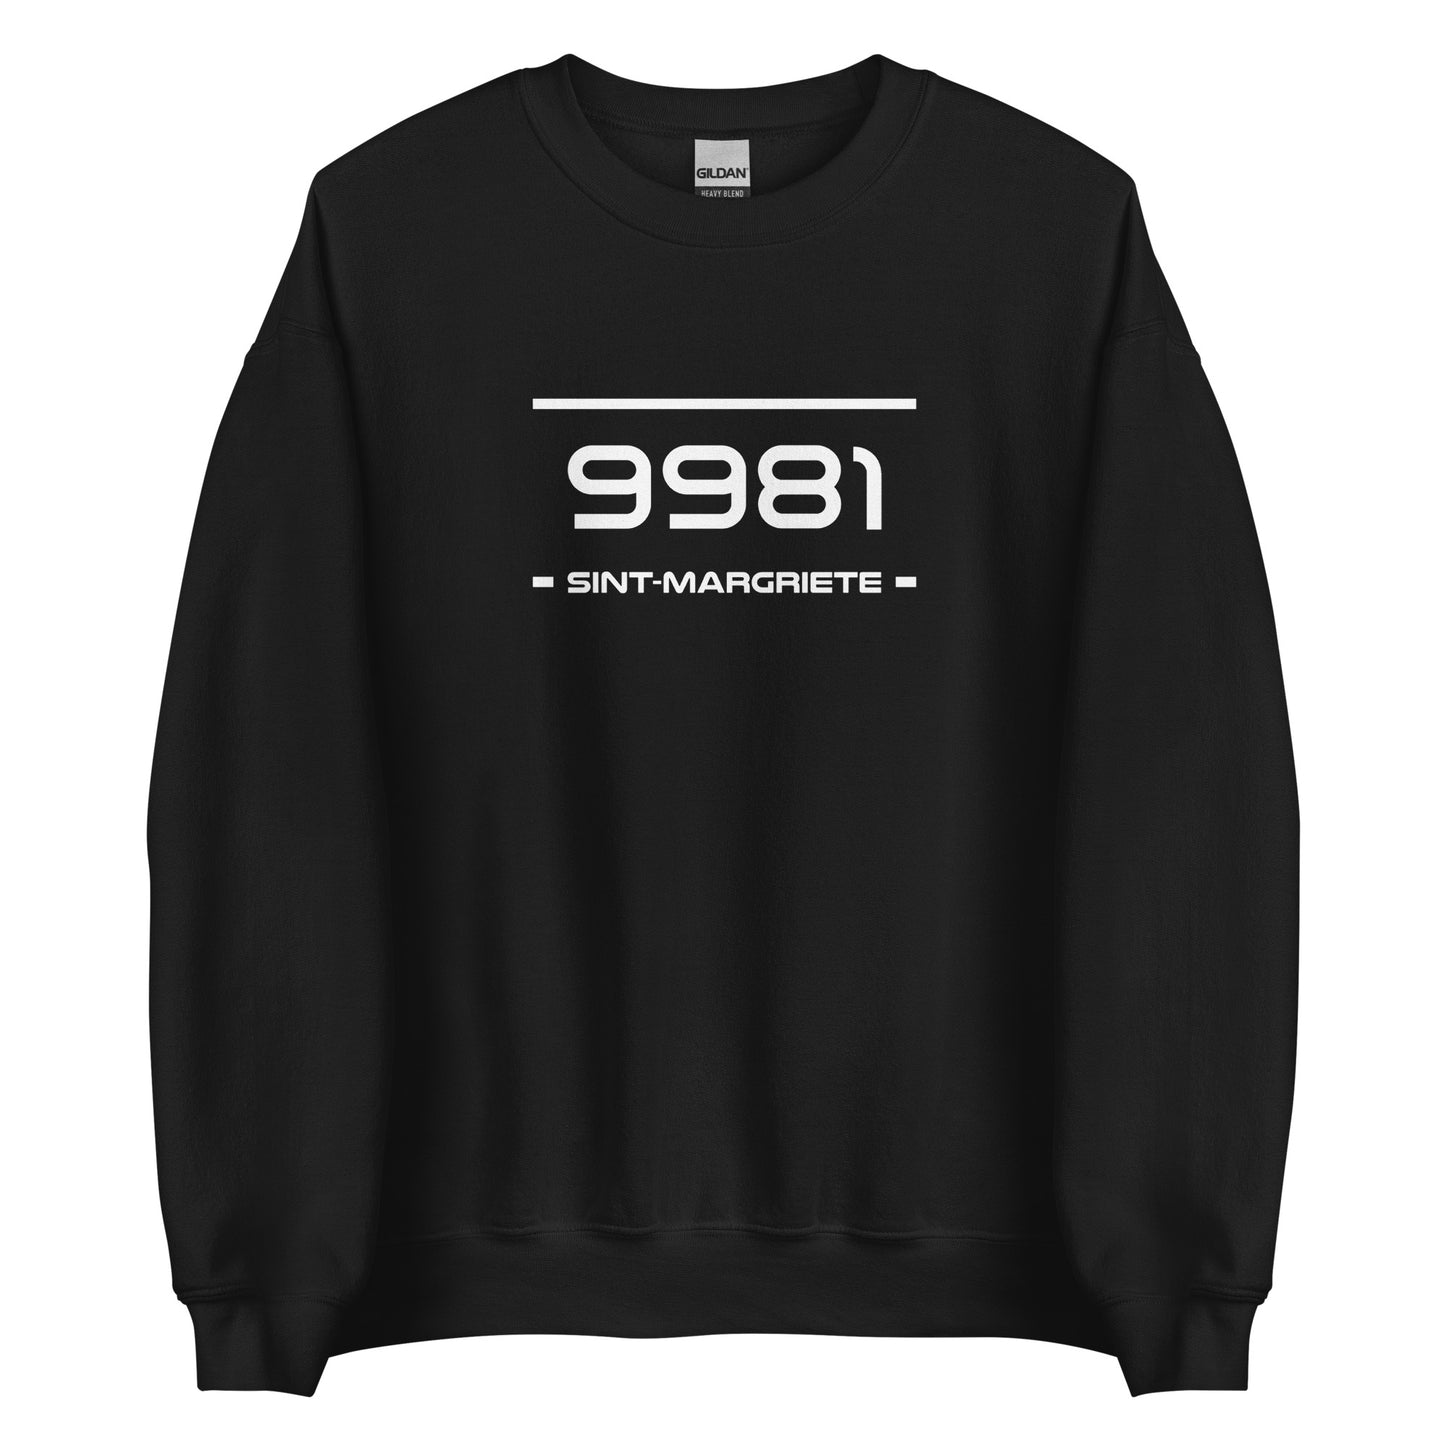 Sweater - 9981 - Sint-Margriete (M/V)